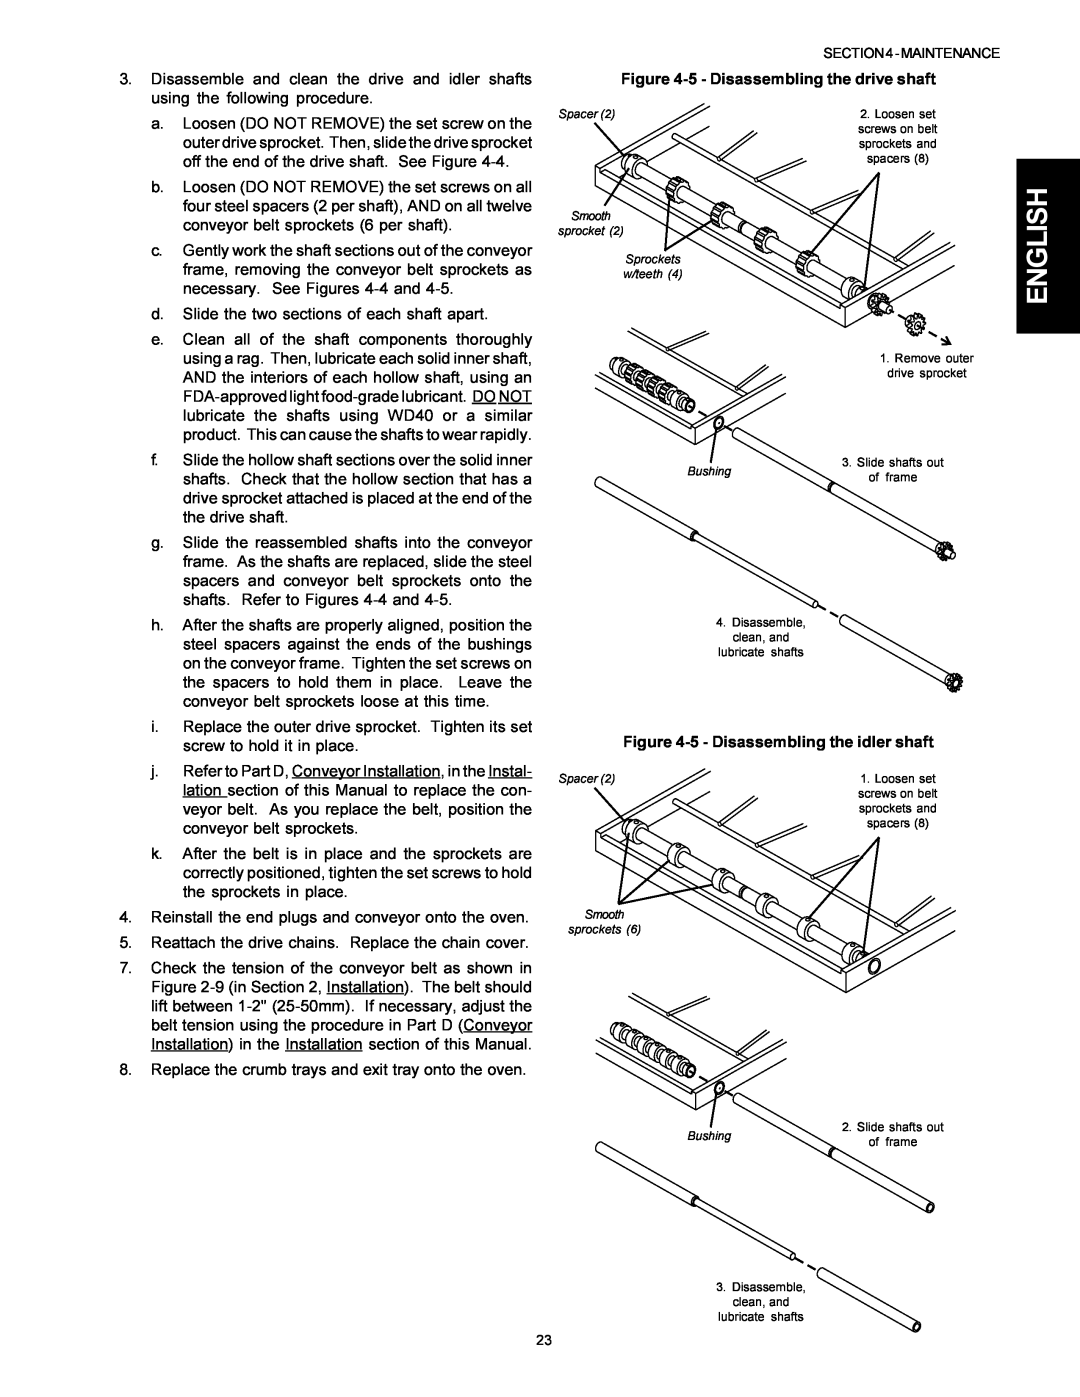 Middleby Marshall Model PS536 installation manual 5 - Disassembling the drive shaft, 5 - Disassembling the idler shaft 